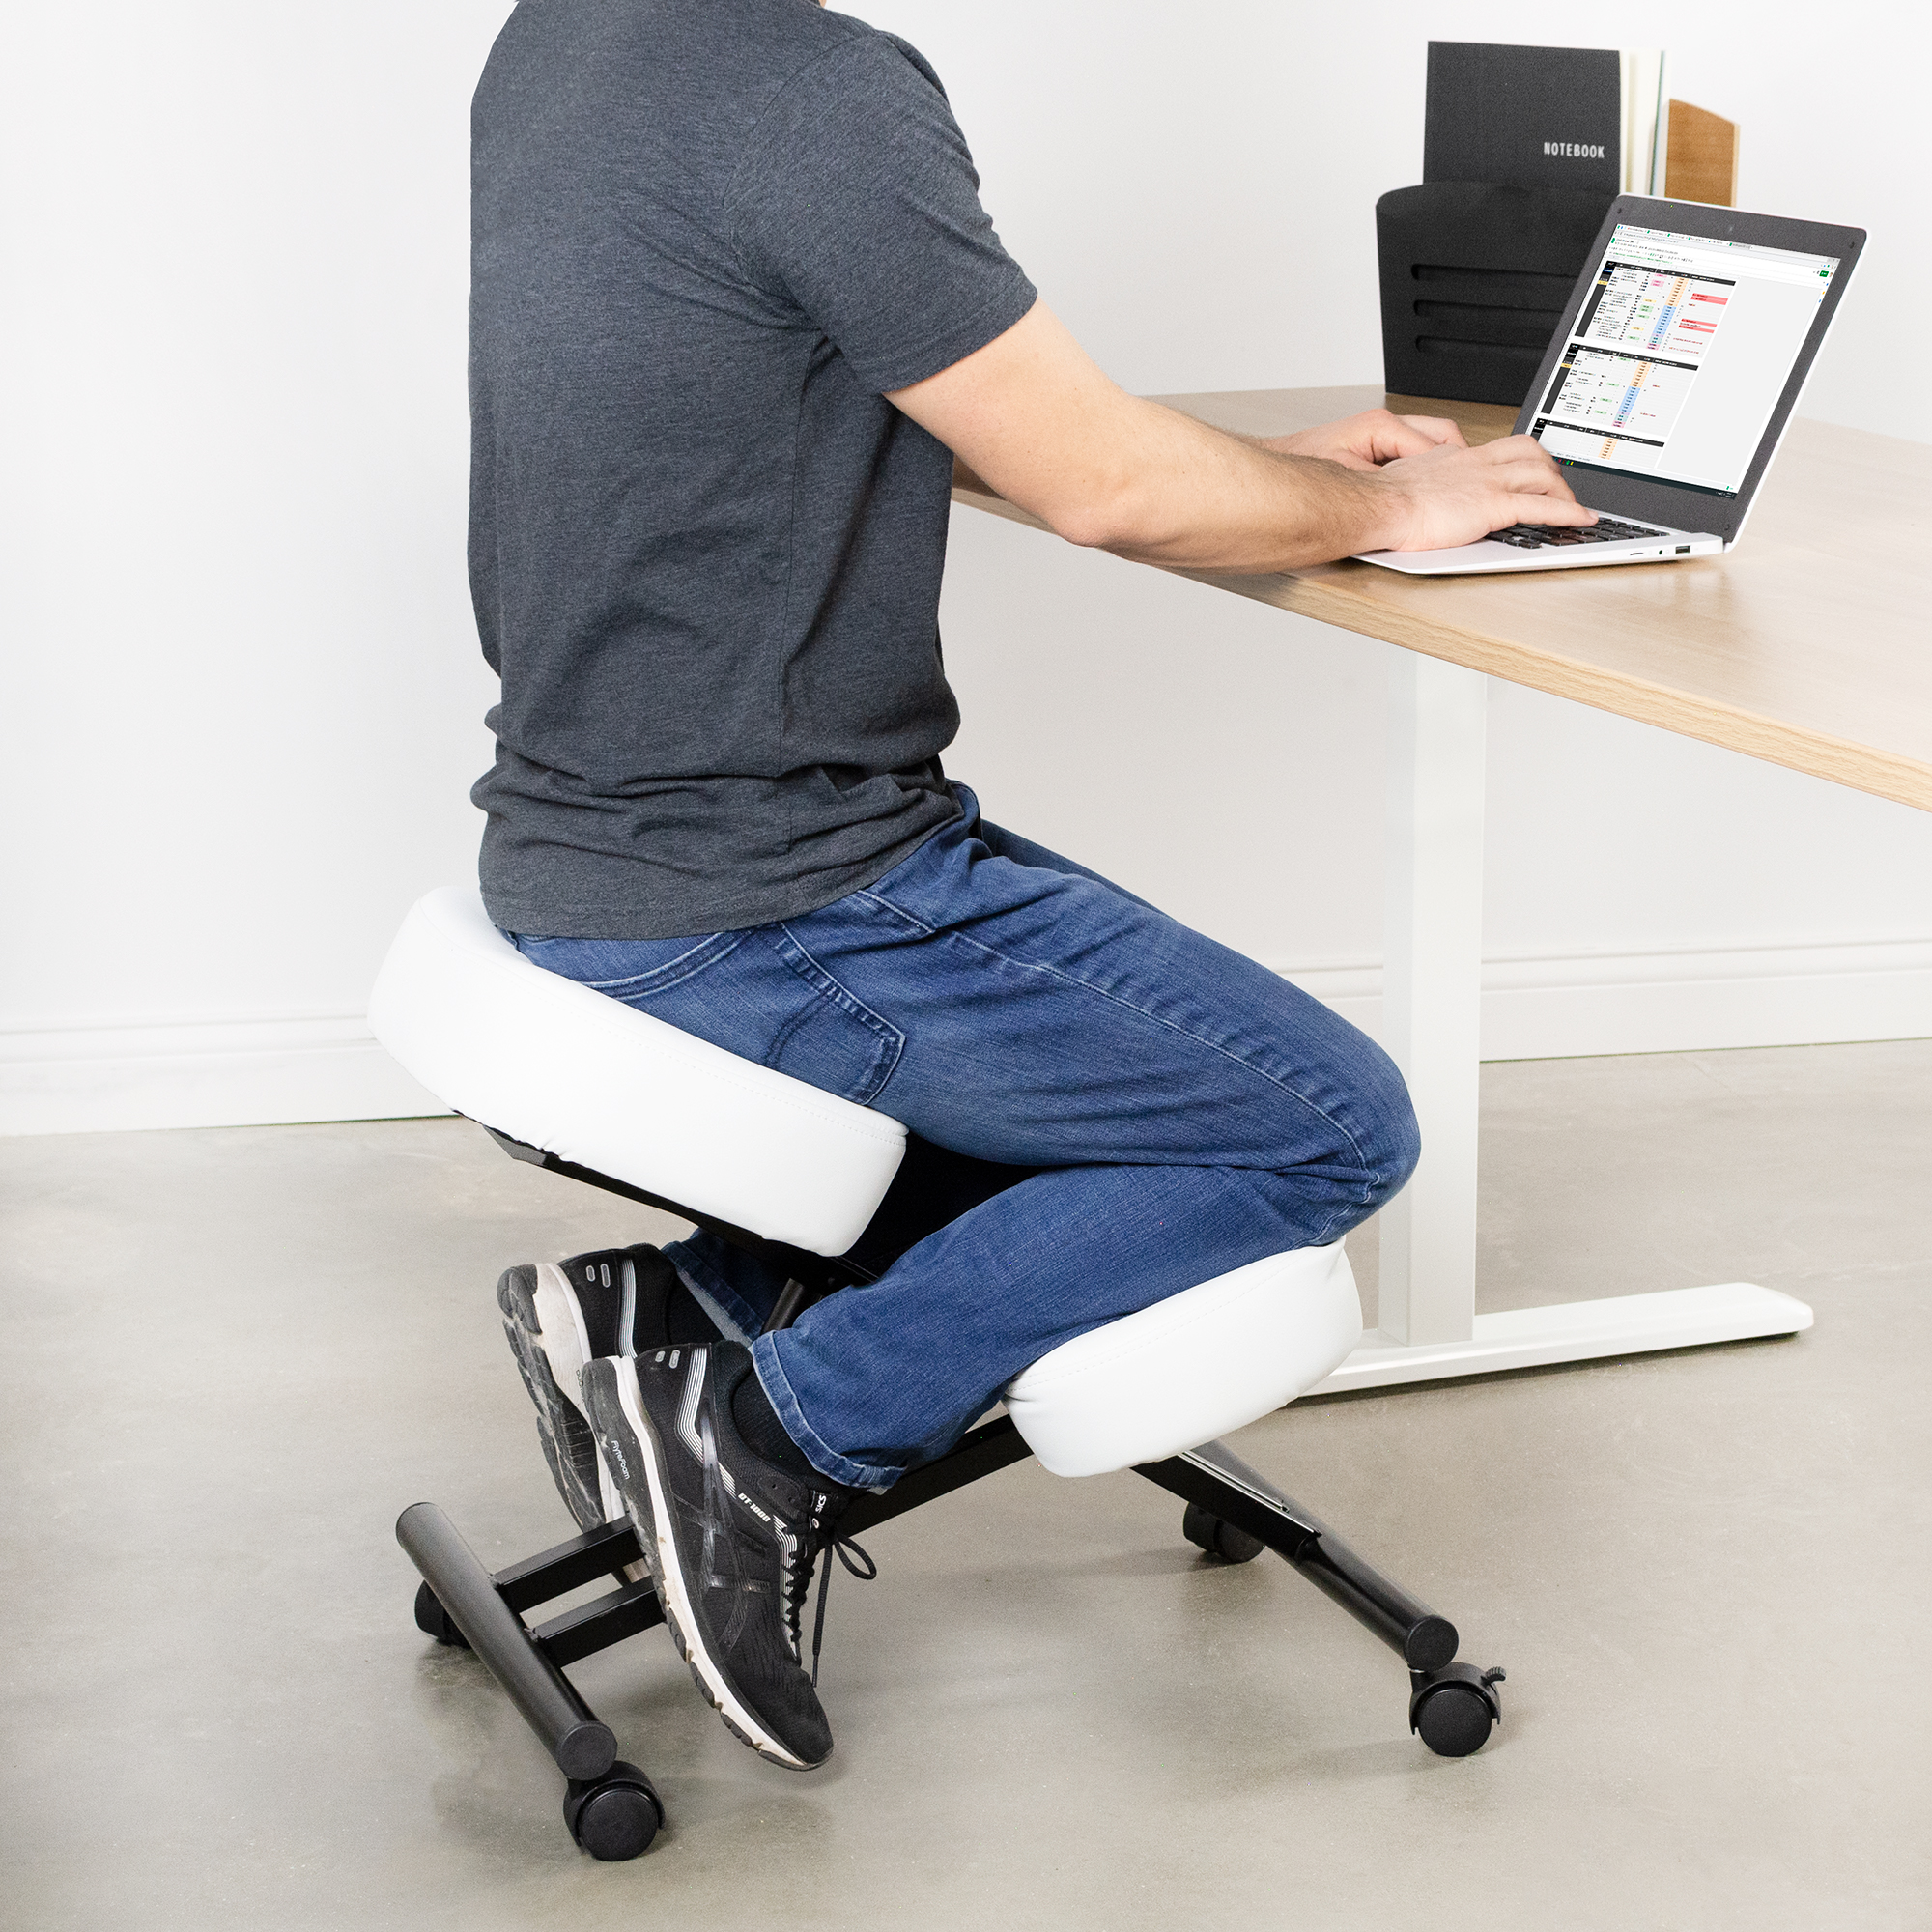 DRAGONN (By VIVO) Ergonomic Kneeling Chair for Home and Office, White ...